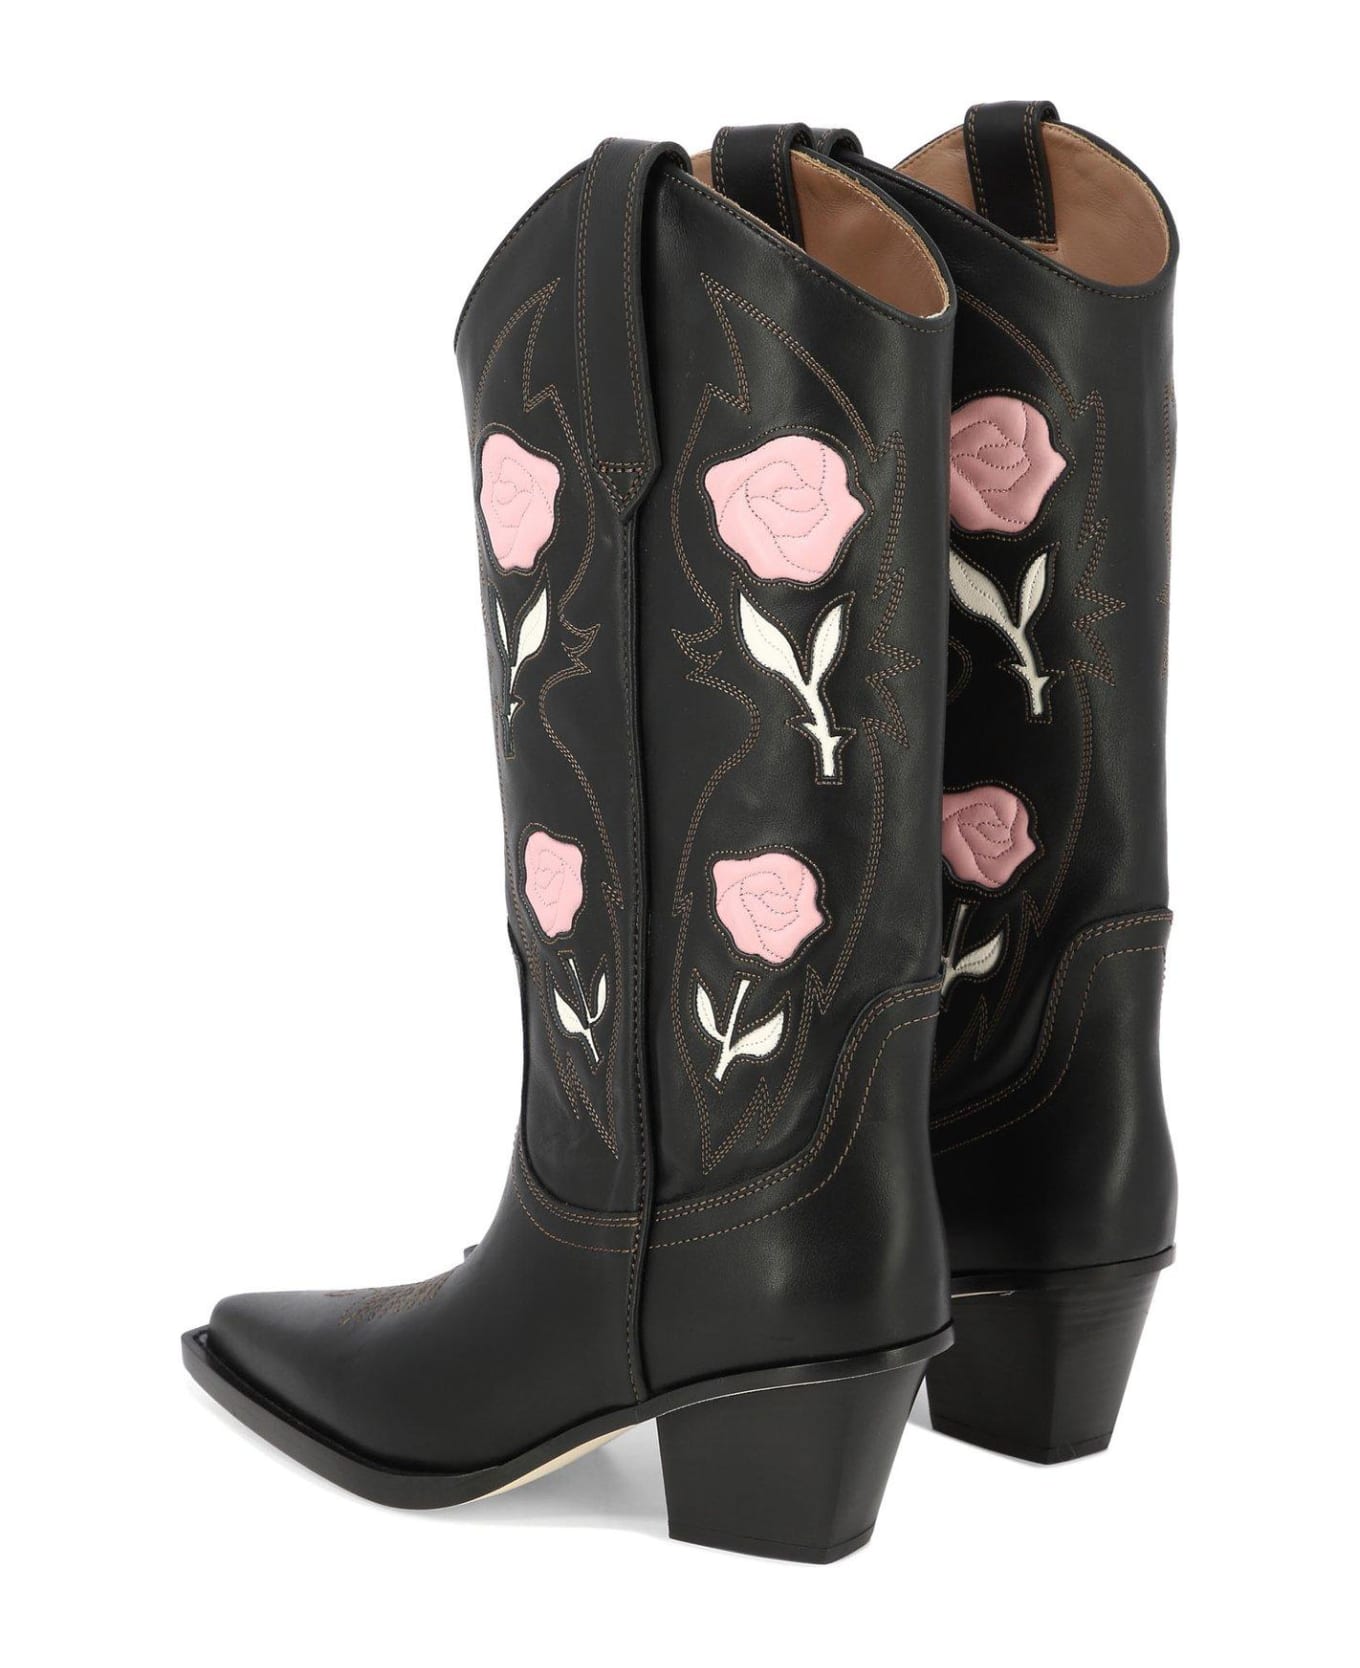 Paris Texas Rosalia Pointed Toe Boots - Black ブーツ